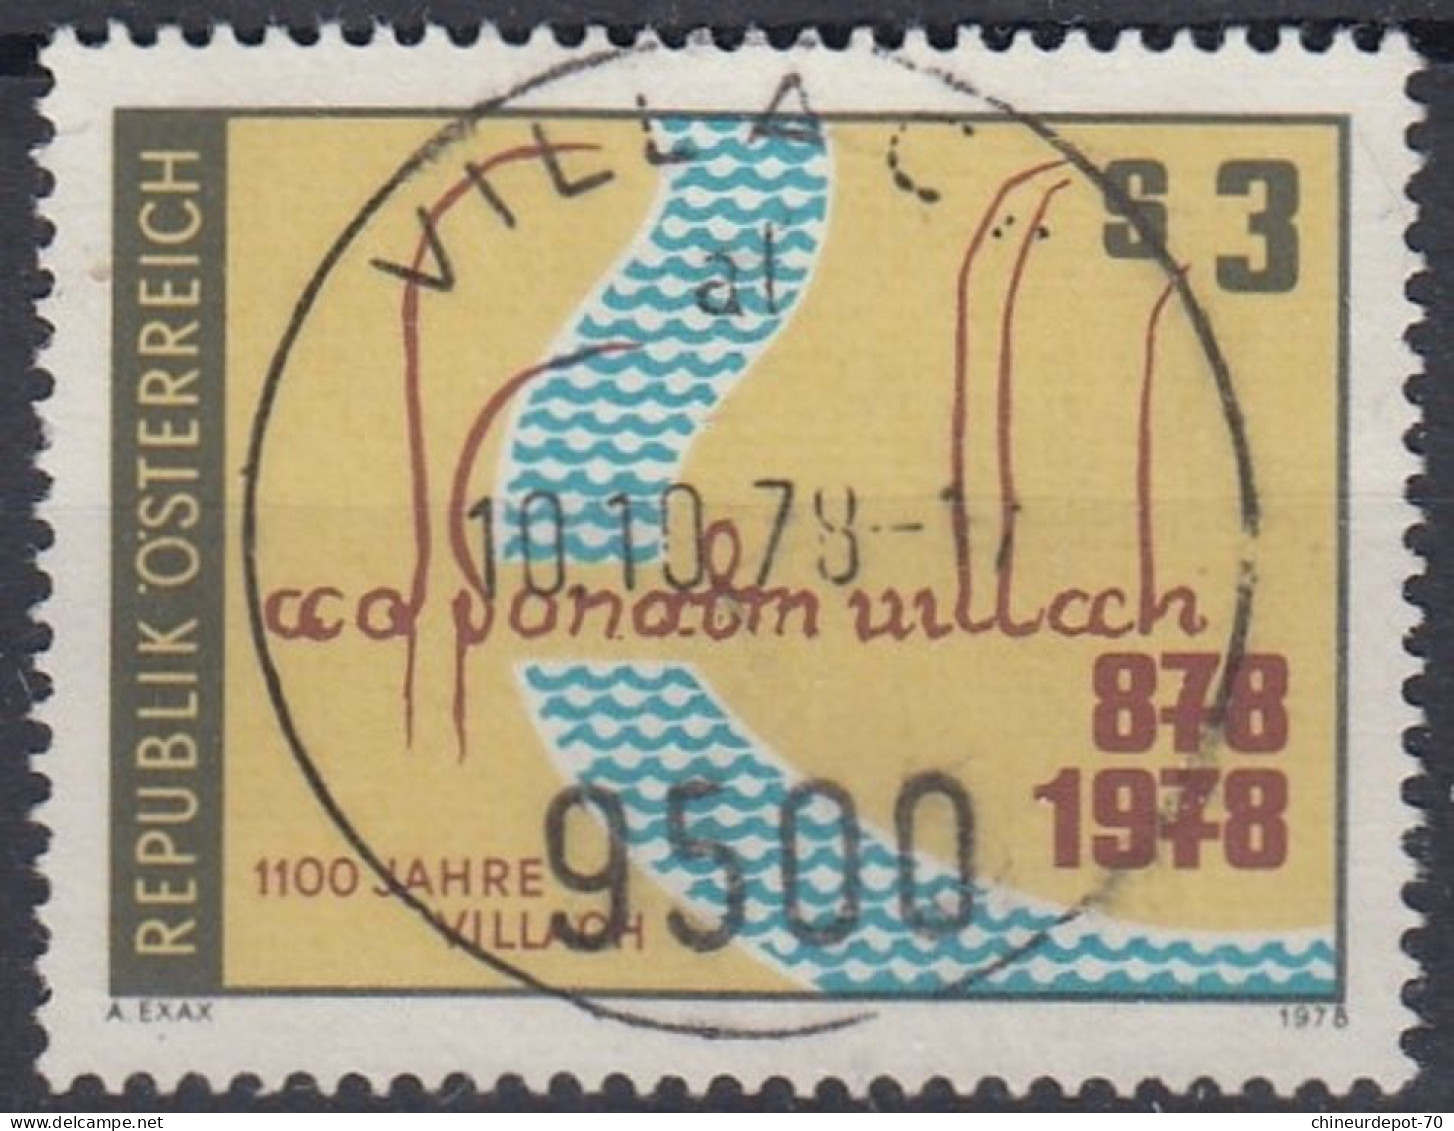 A. EXAX 1100 JAHRE VILLACH 1978 Cachet Villach 9500 - Used Stamps